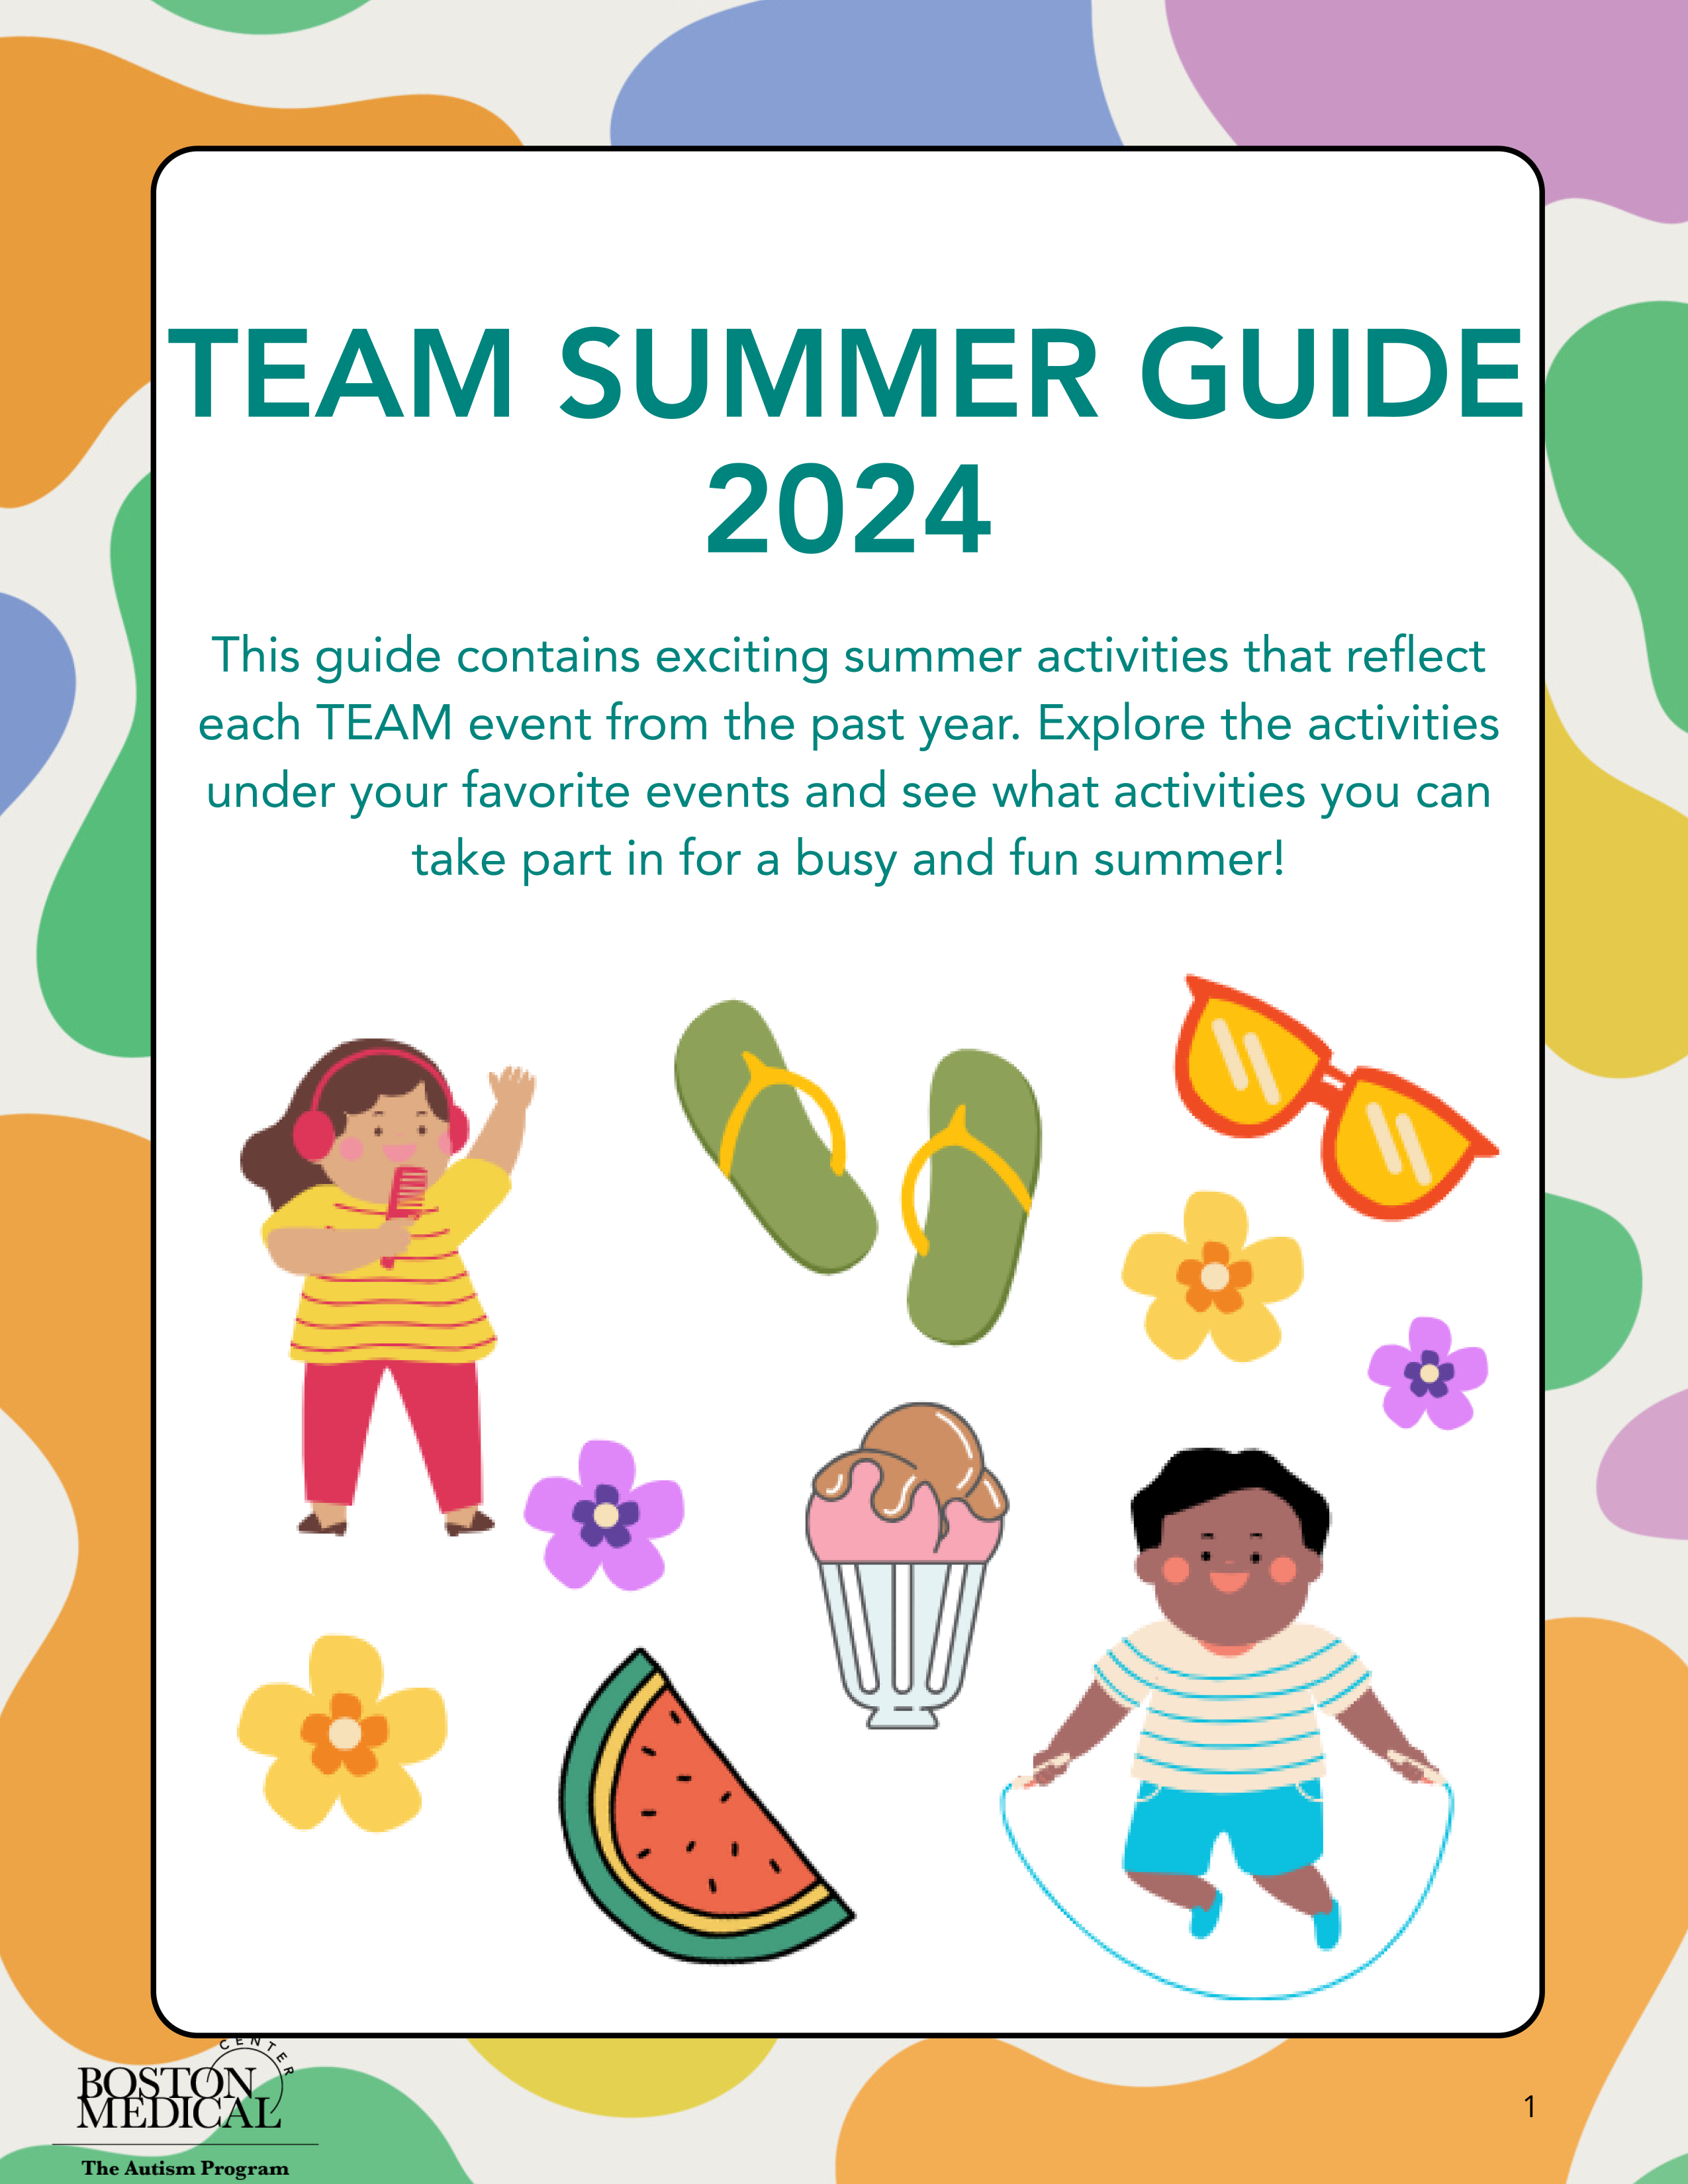 TEAM Summer Guide 2024